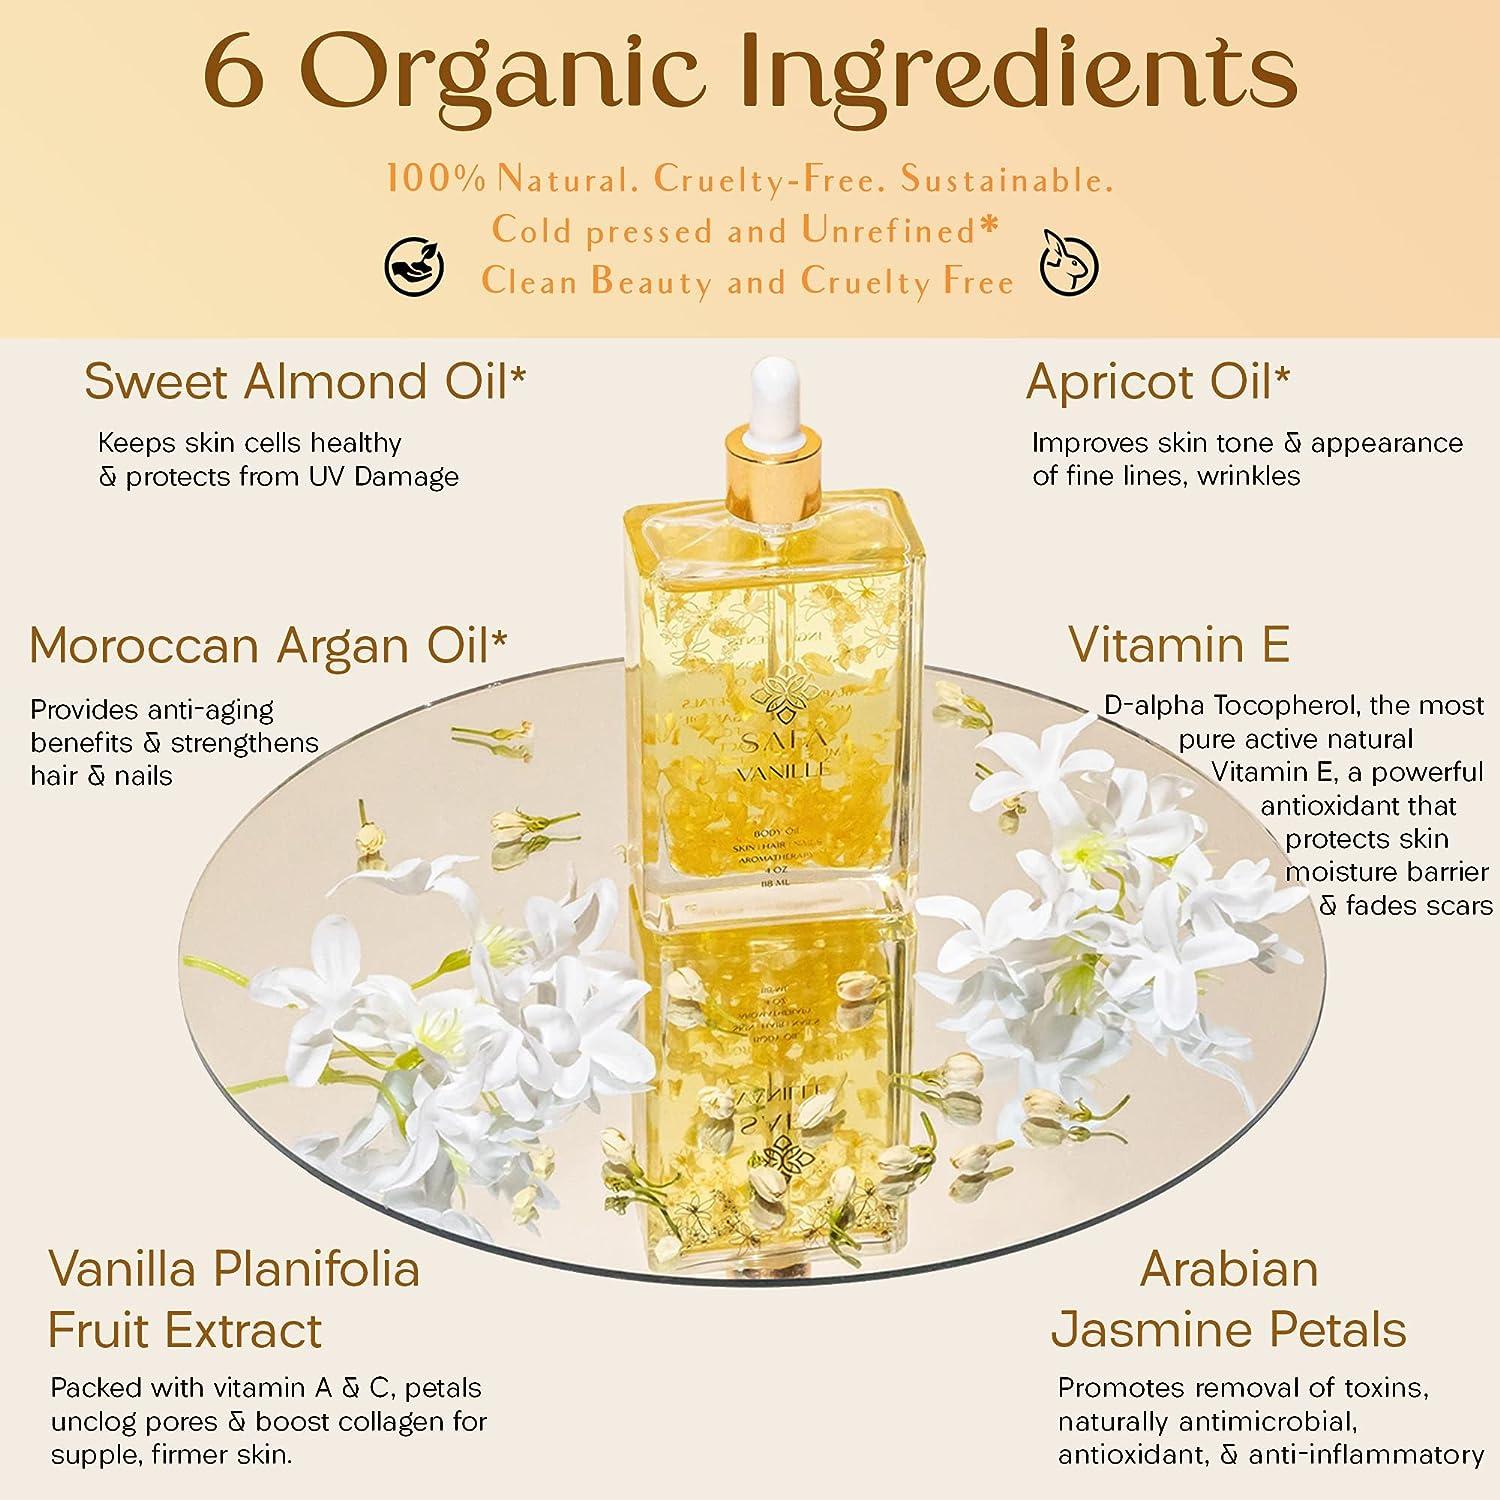 Vanilla Essential Oil Organic Olant & Natural 100% Pure